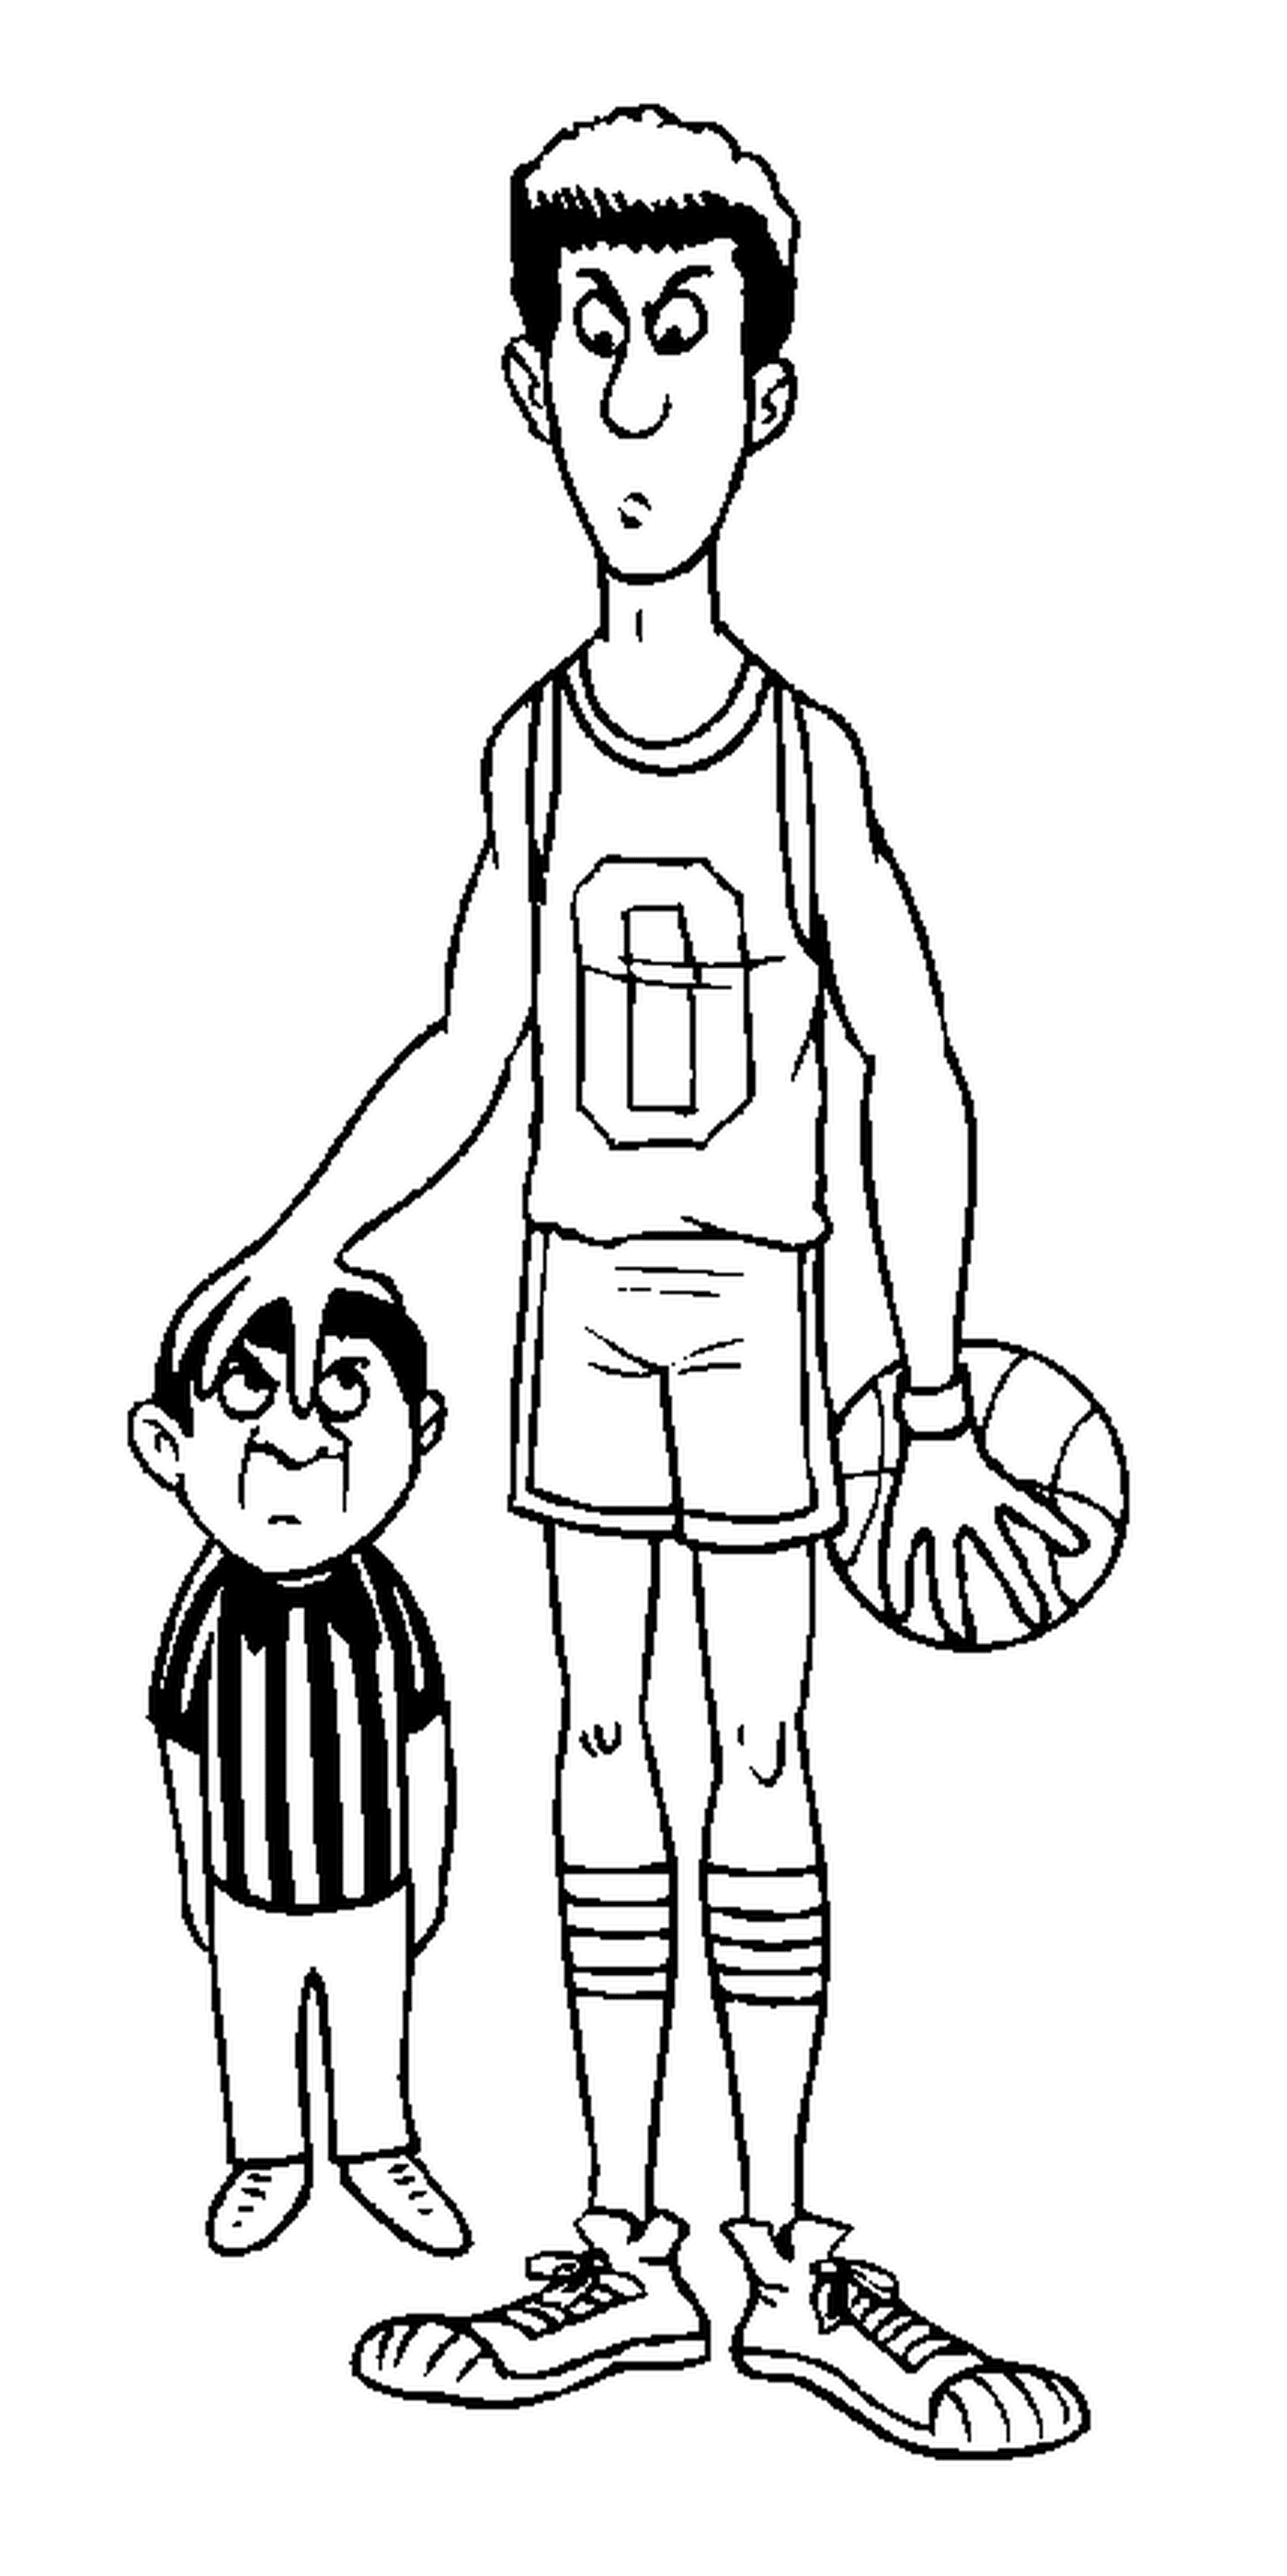  Баскетболист с маленьким судьей 